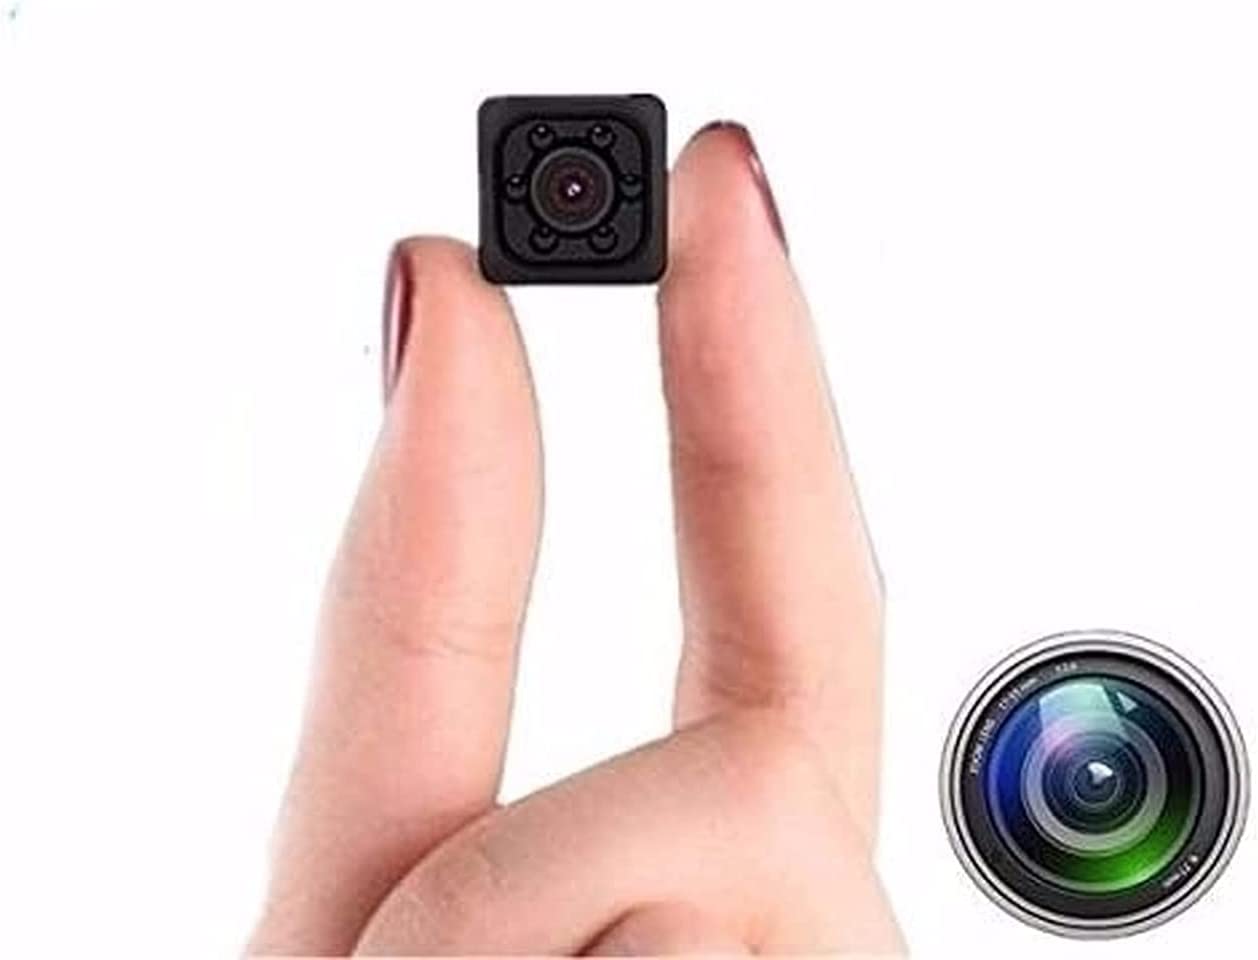 Mini camera with hd 1080p video and audio recording,